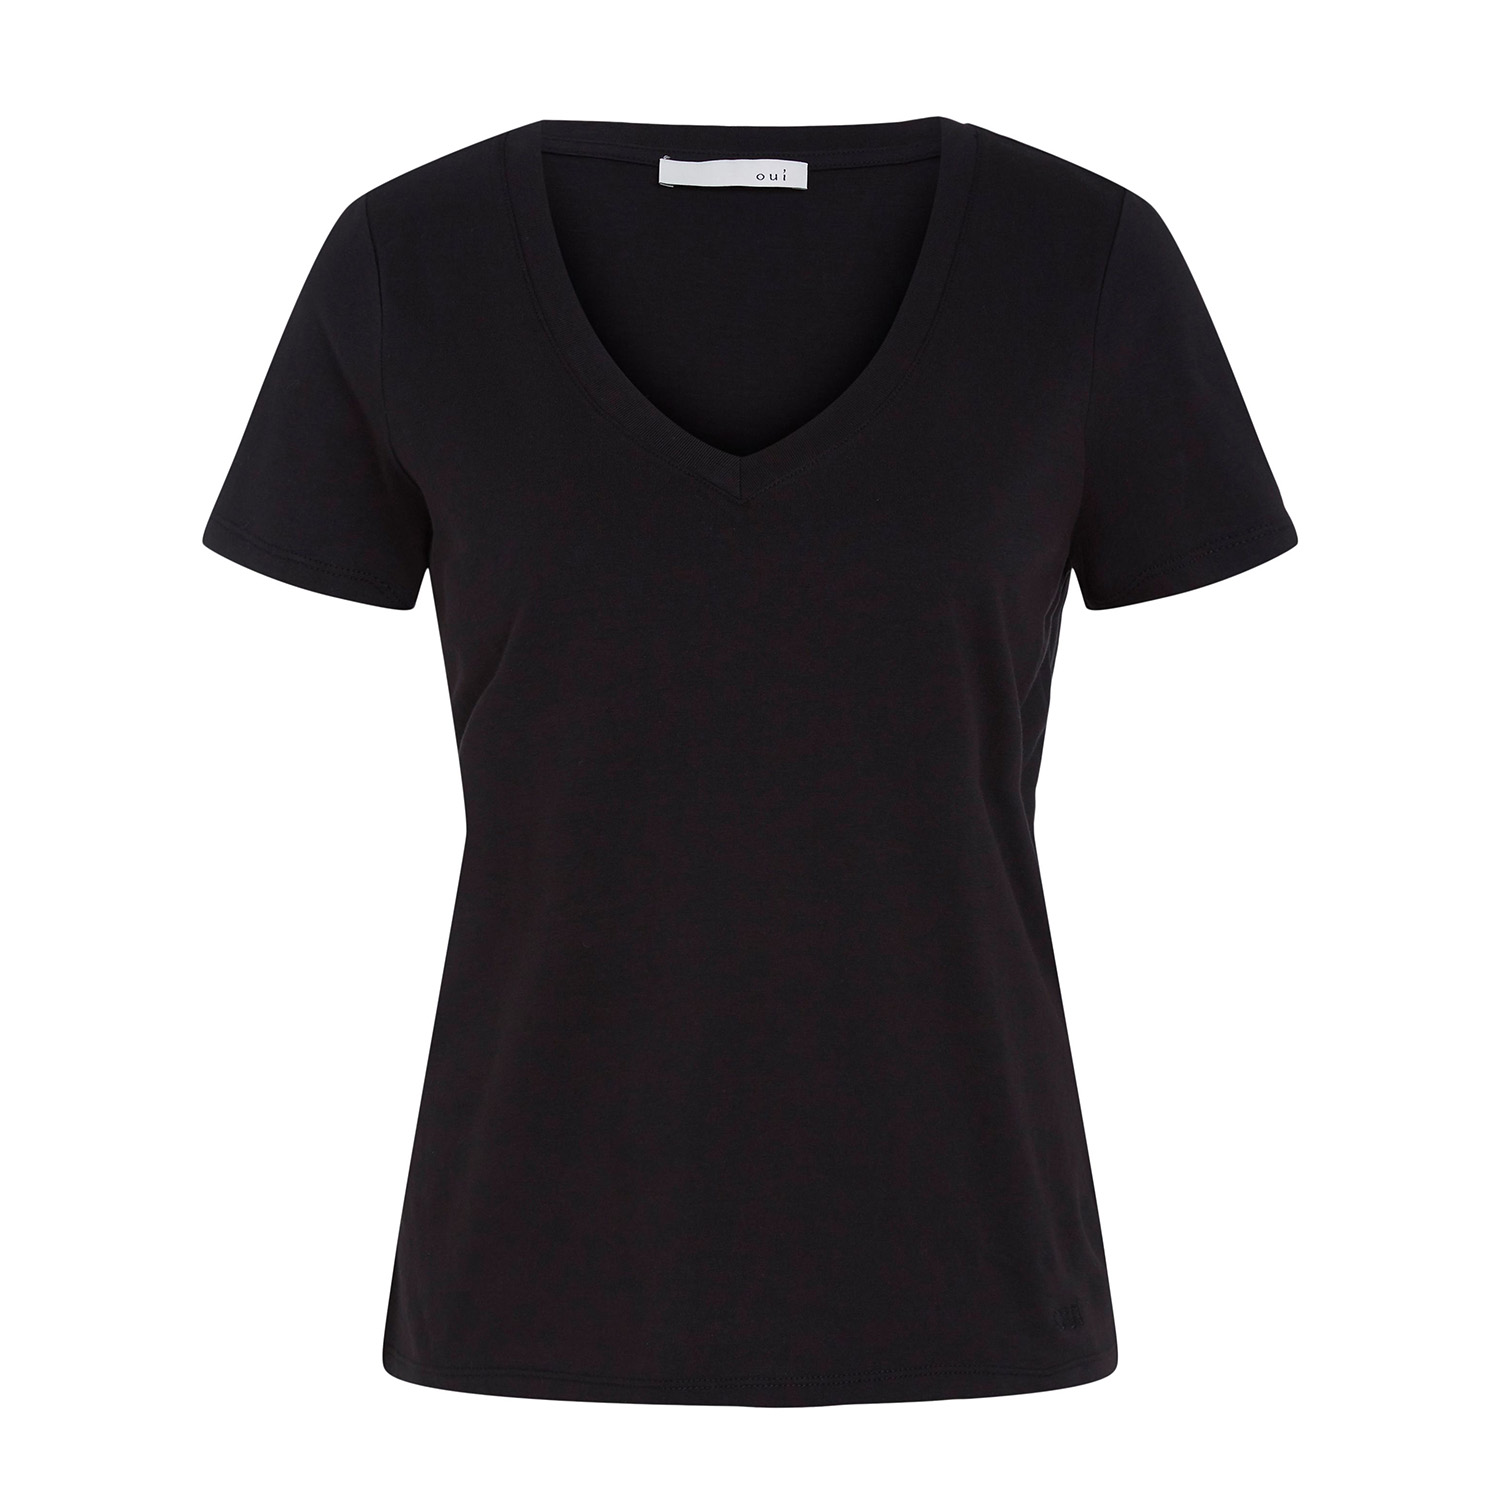 Oui Fashion Carli T-shirt Black